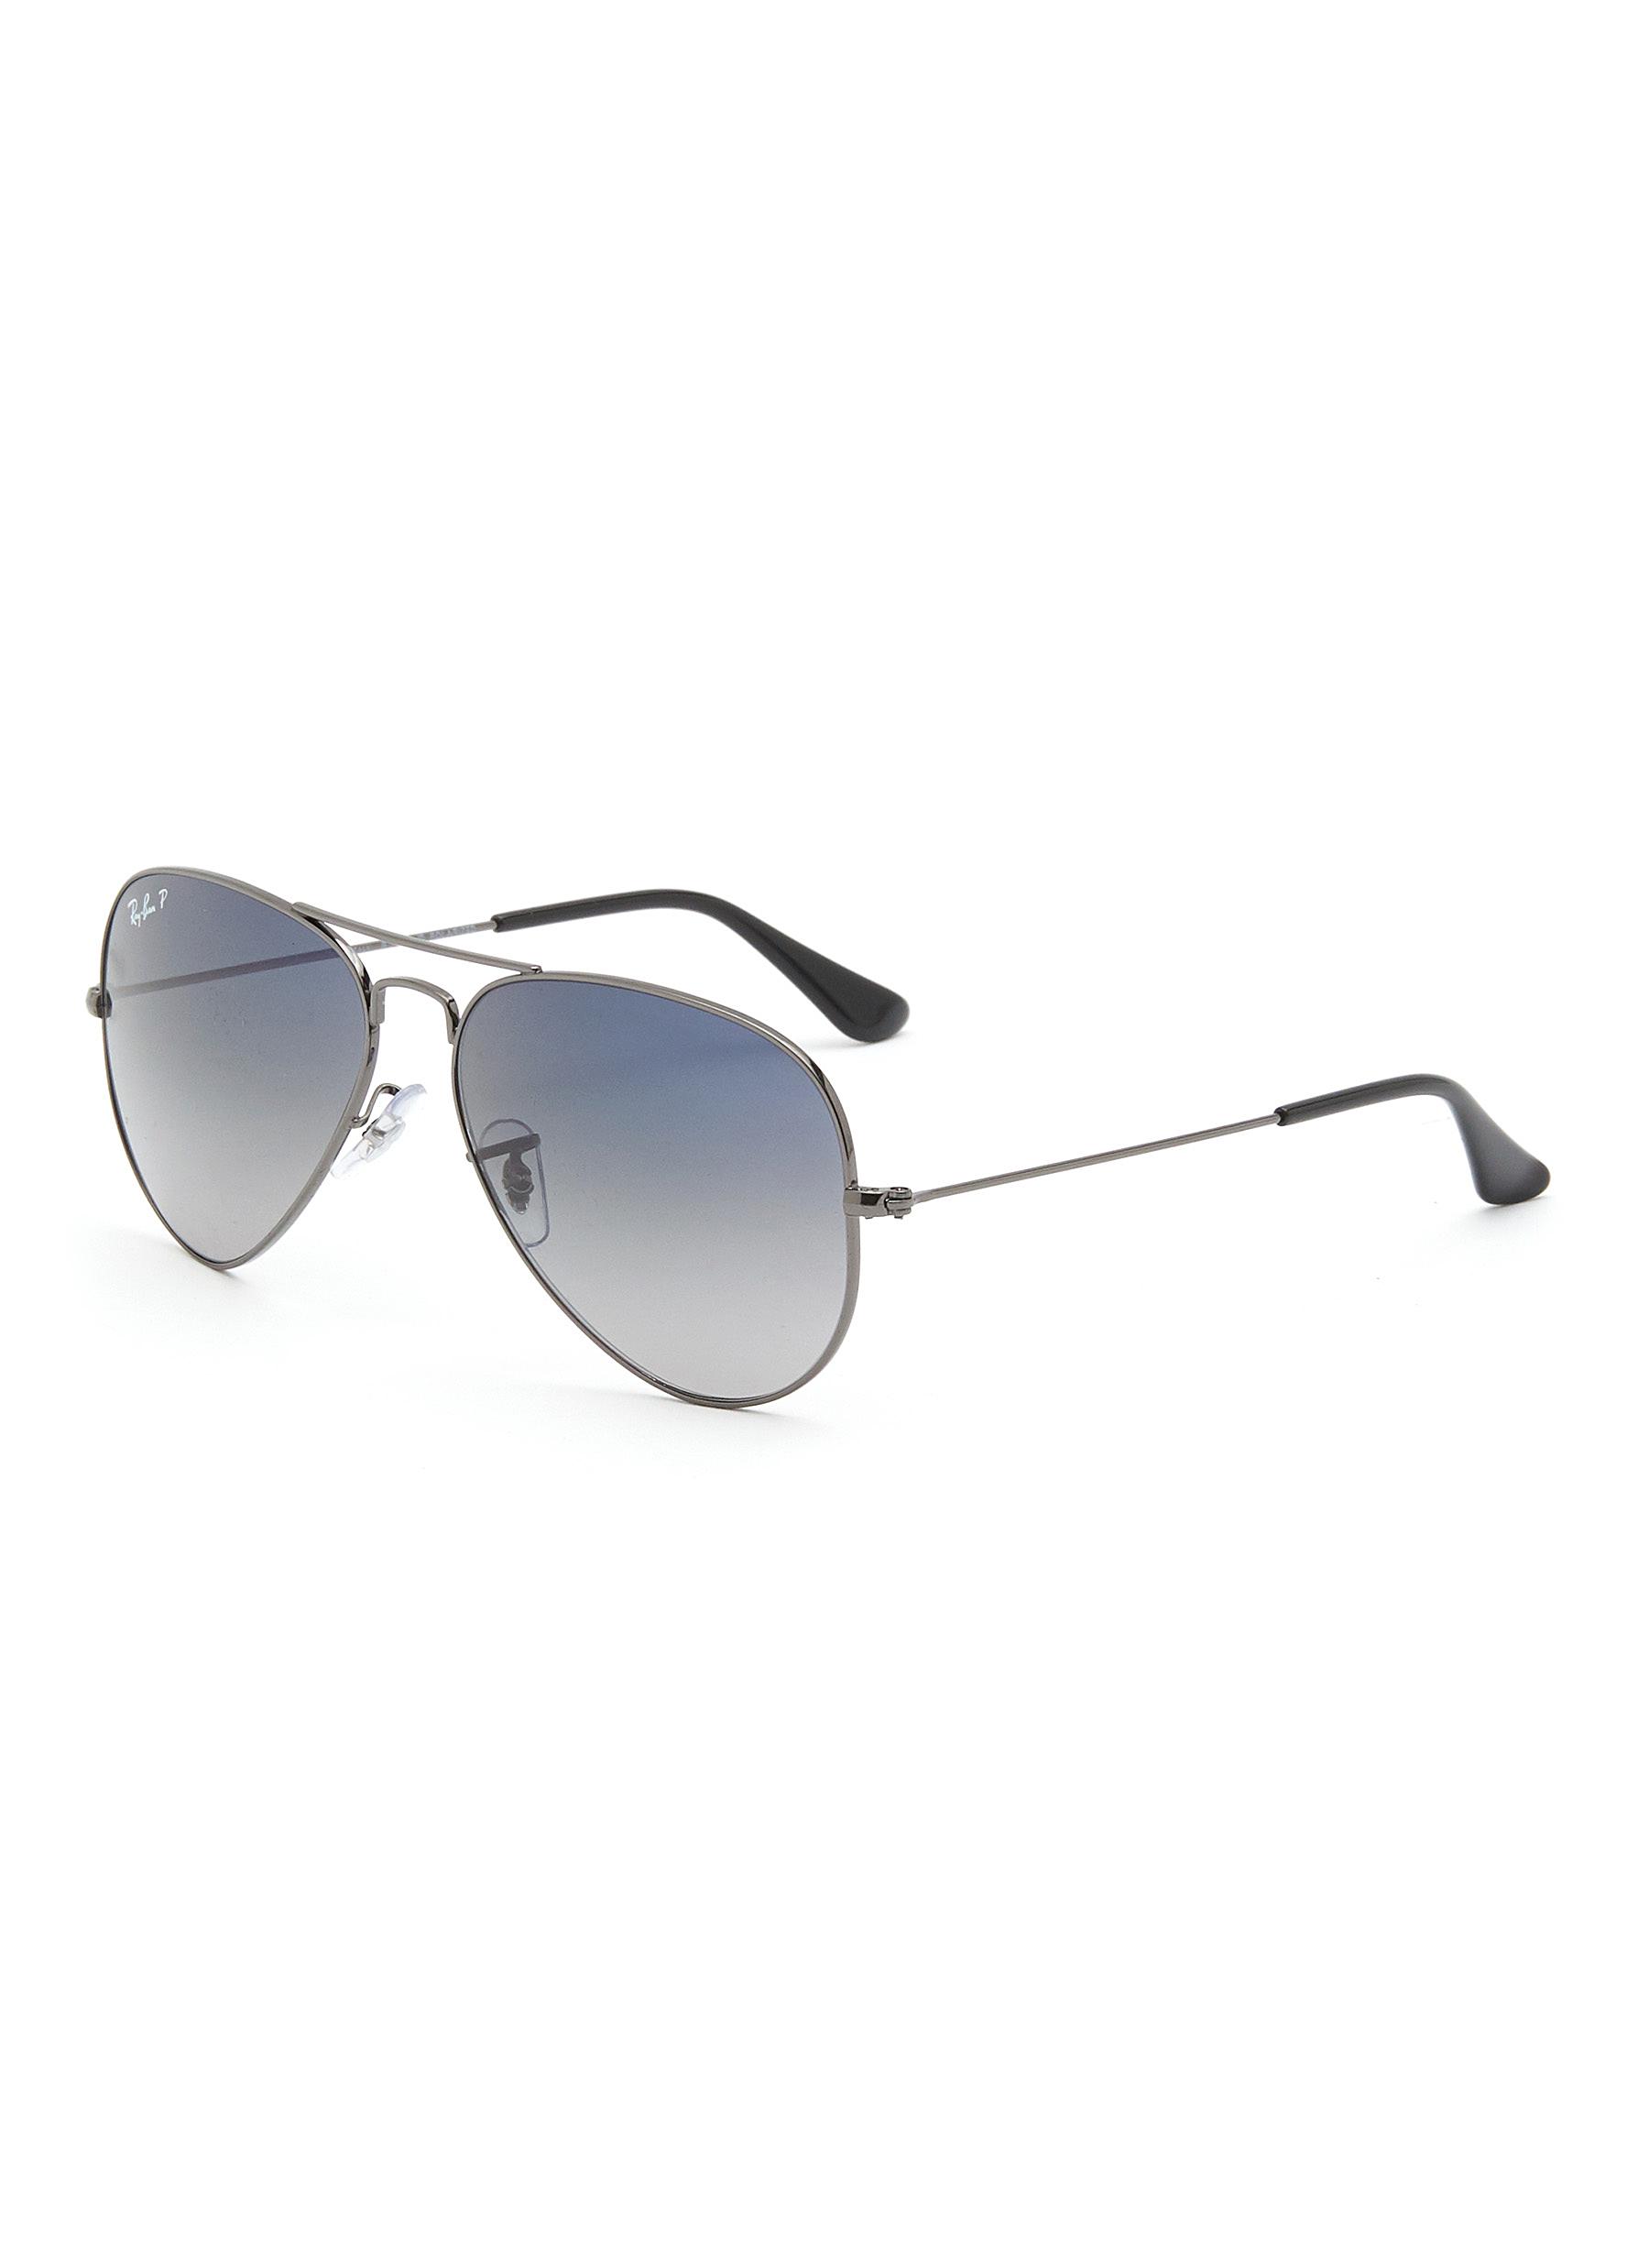 Gradient Blue Lens Grey Metal Aviator Sunglasses